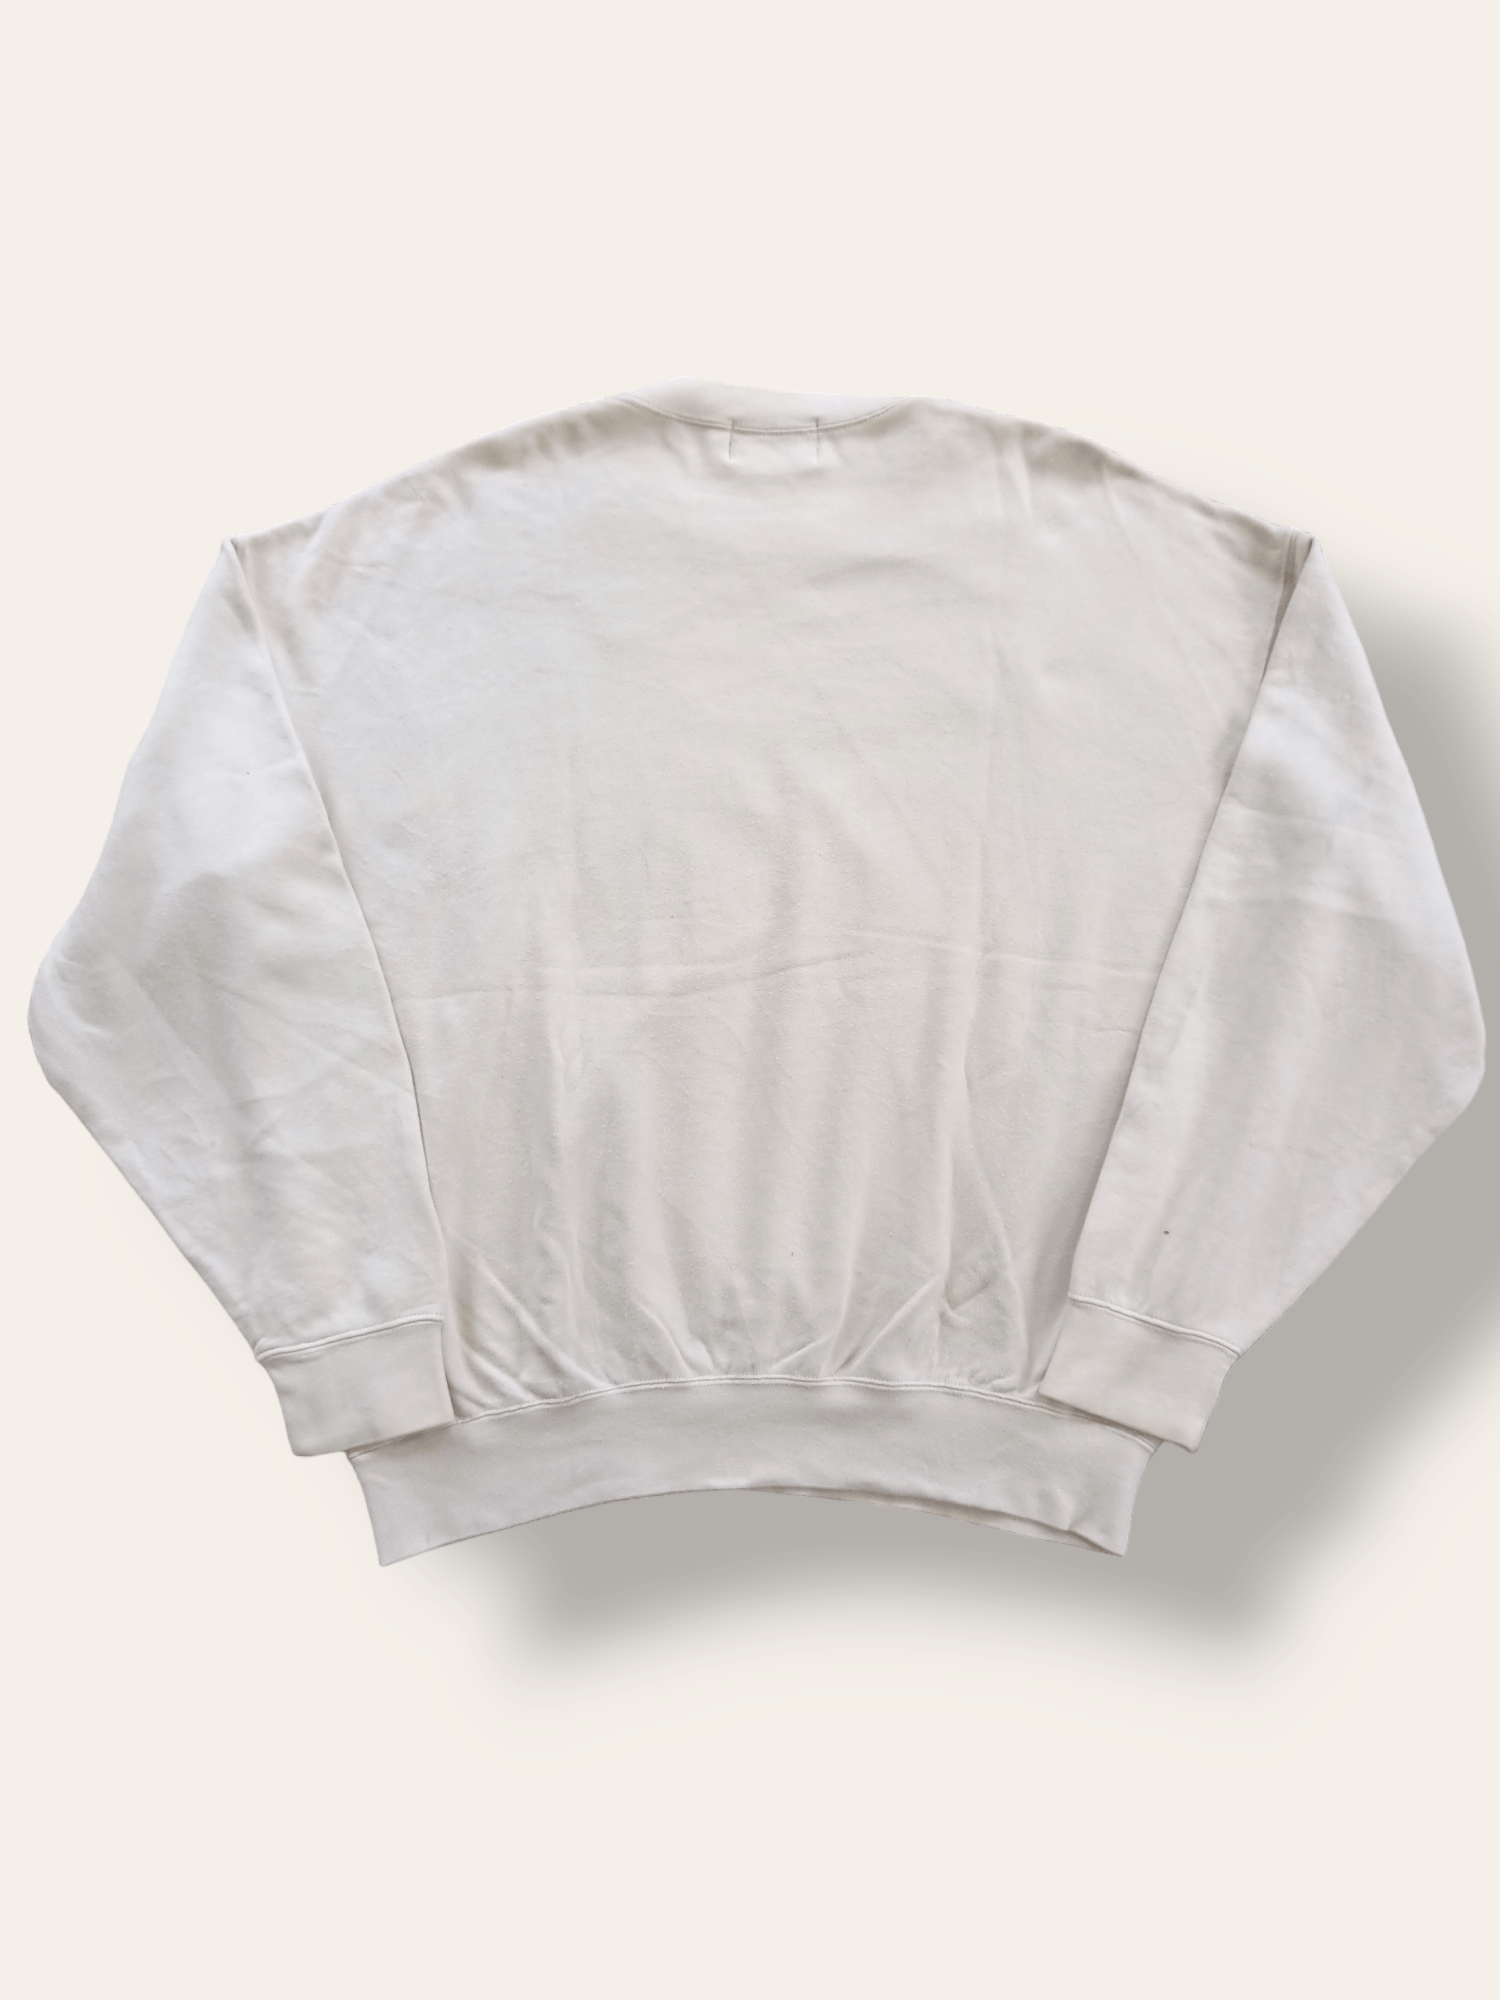 Vintage MR JUNKO KOSHINO Homme Made in Japan Sweatshirt - 2